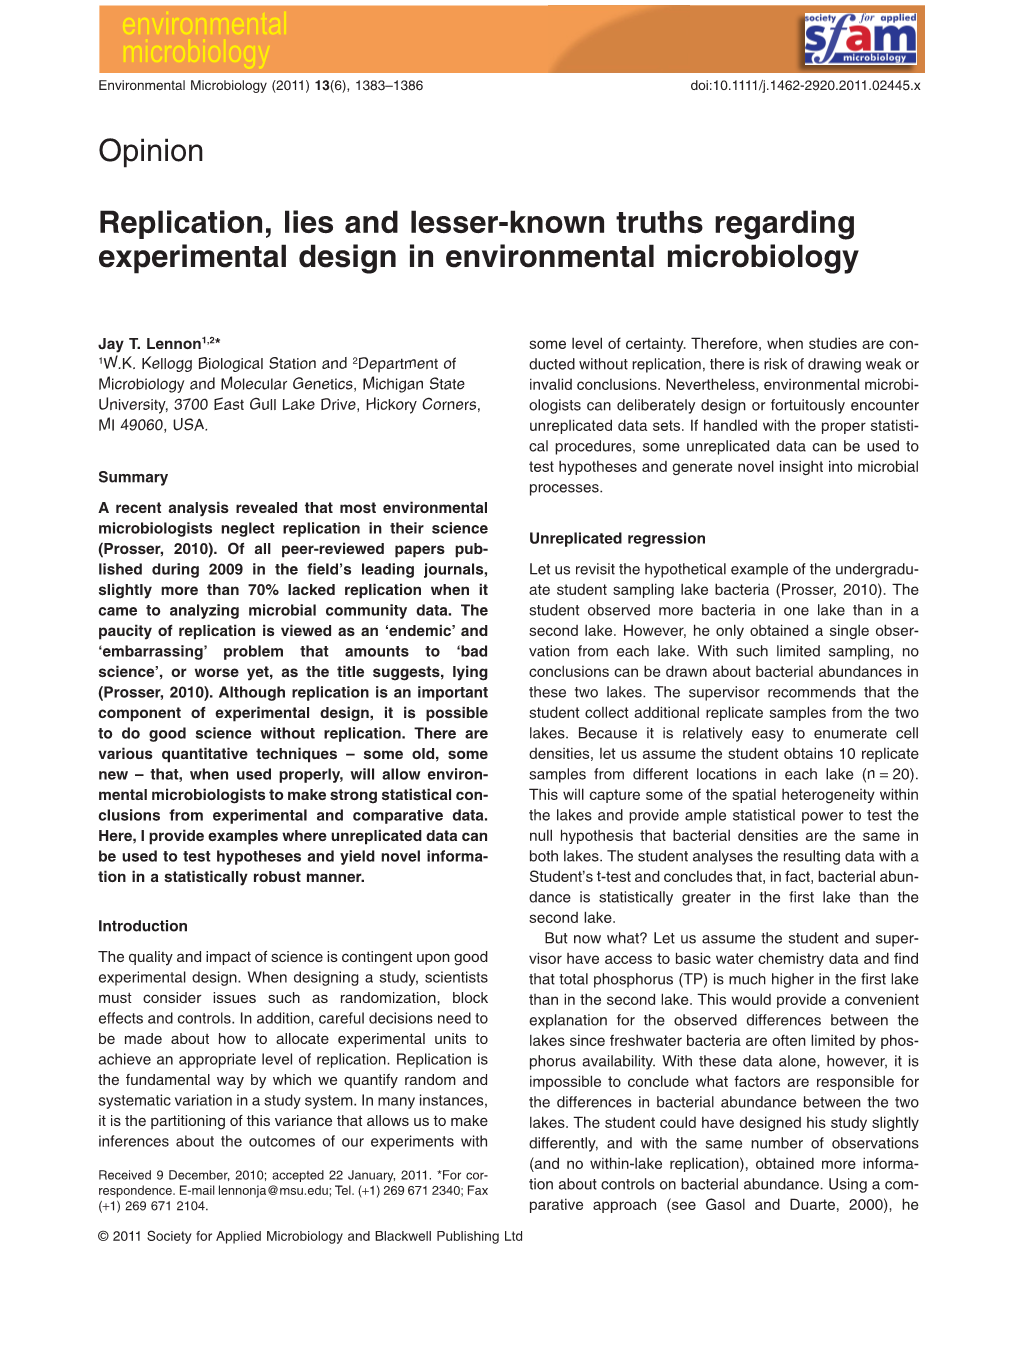 Replication, Lies and Lesserknown Truths Regarding Experimental